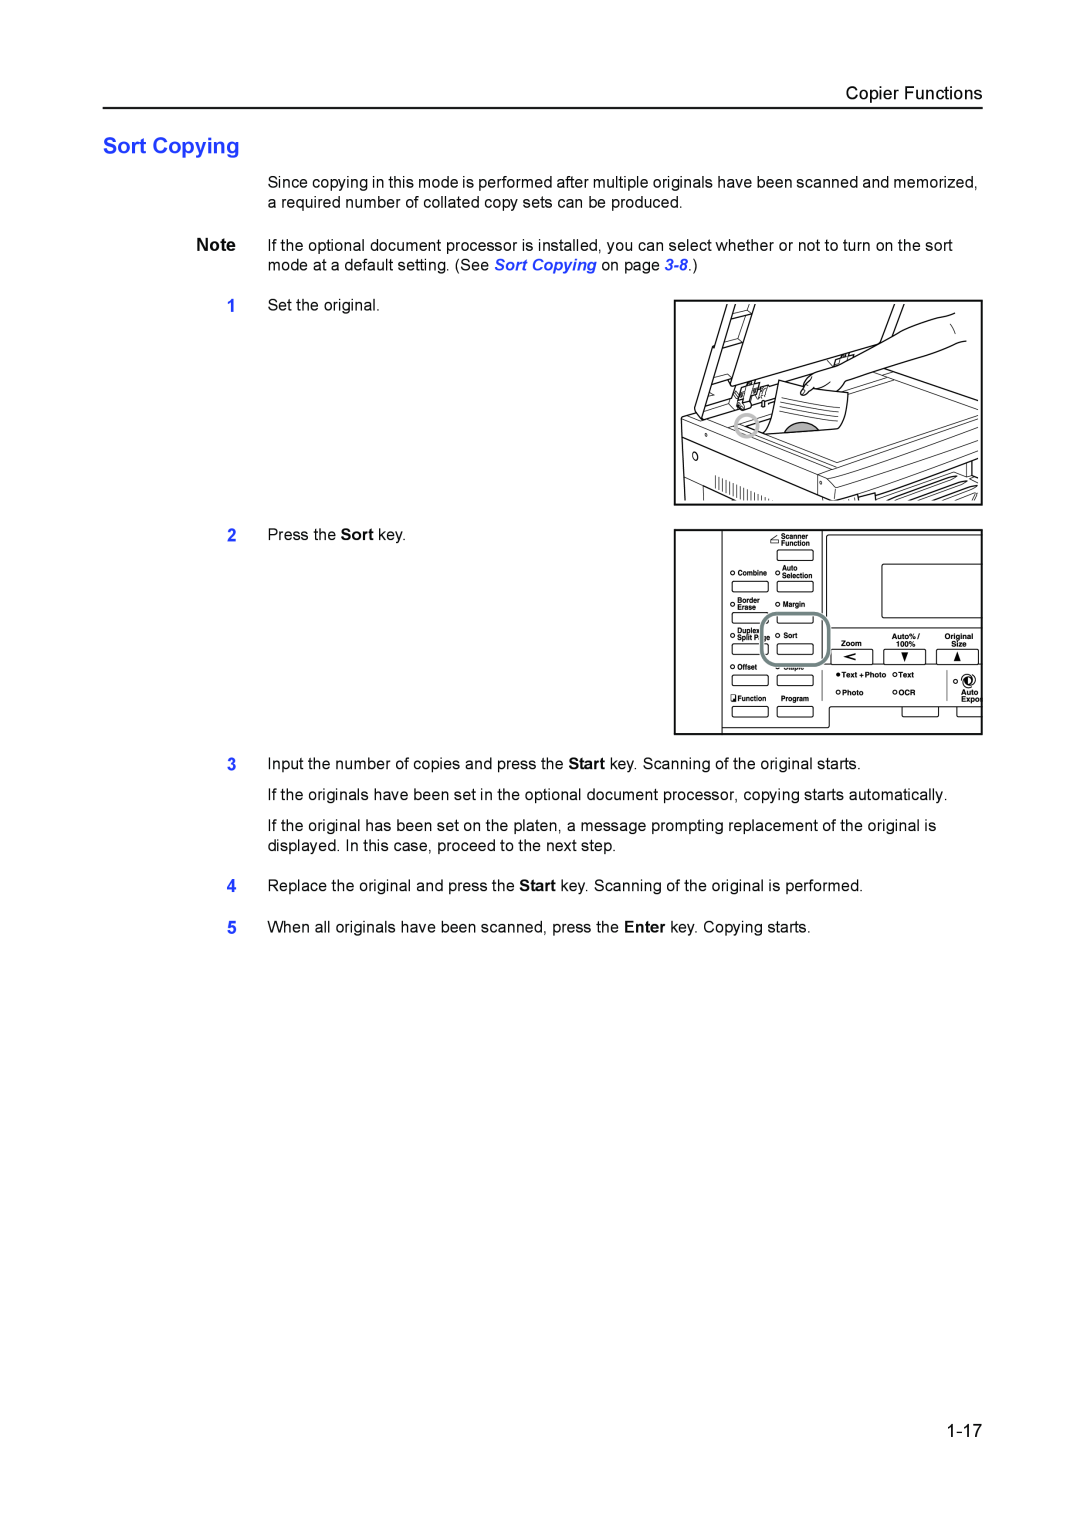 Kyocera 1650, 2050, 2550 manual Sort Copying, 1-17, Copier Functions 